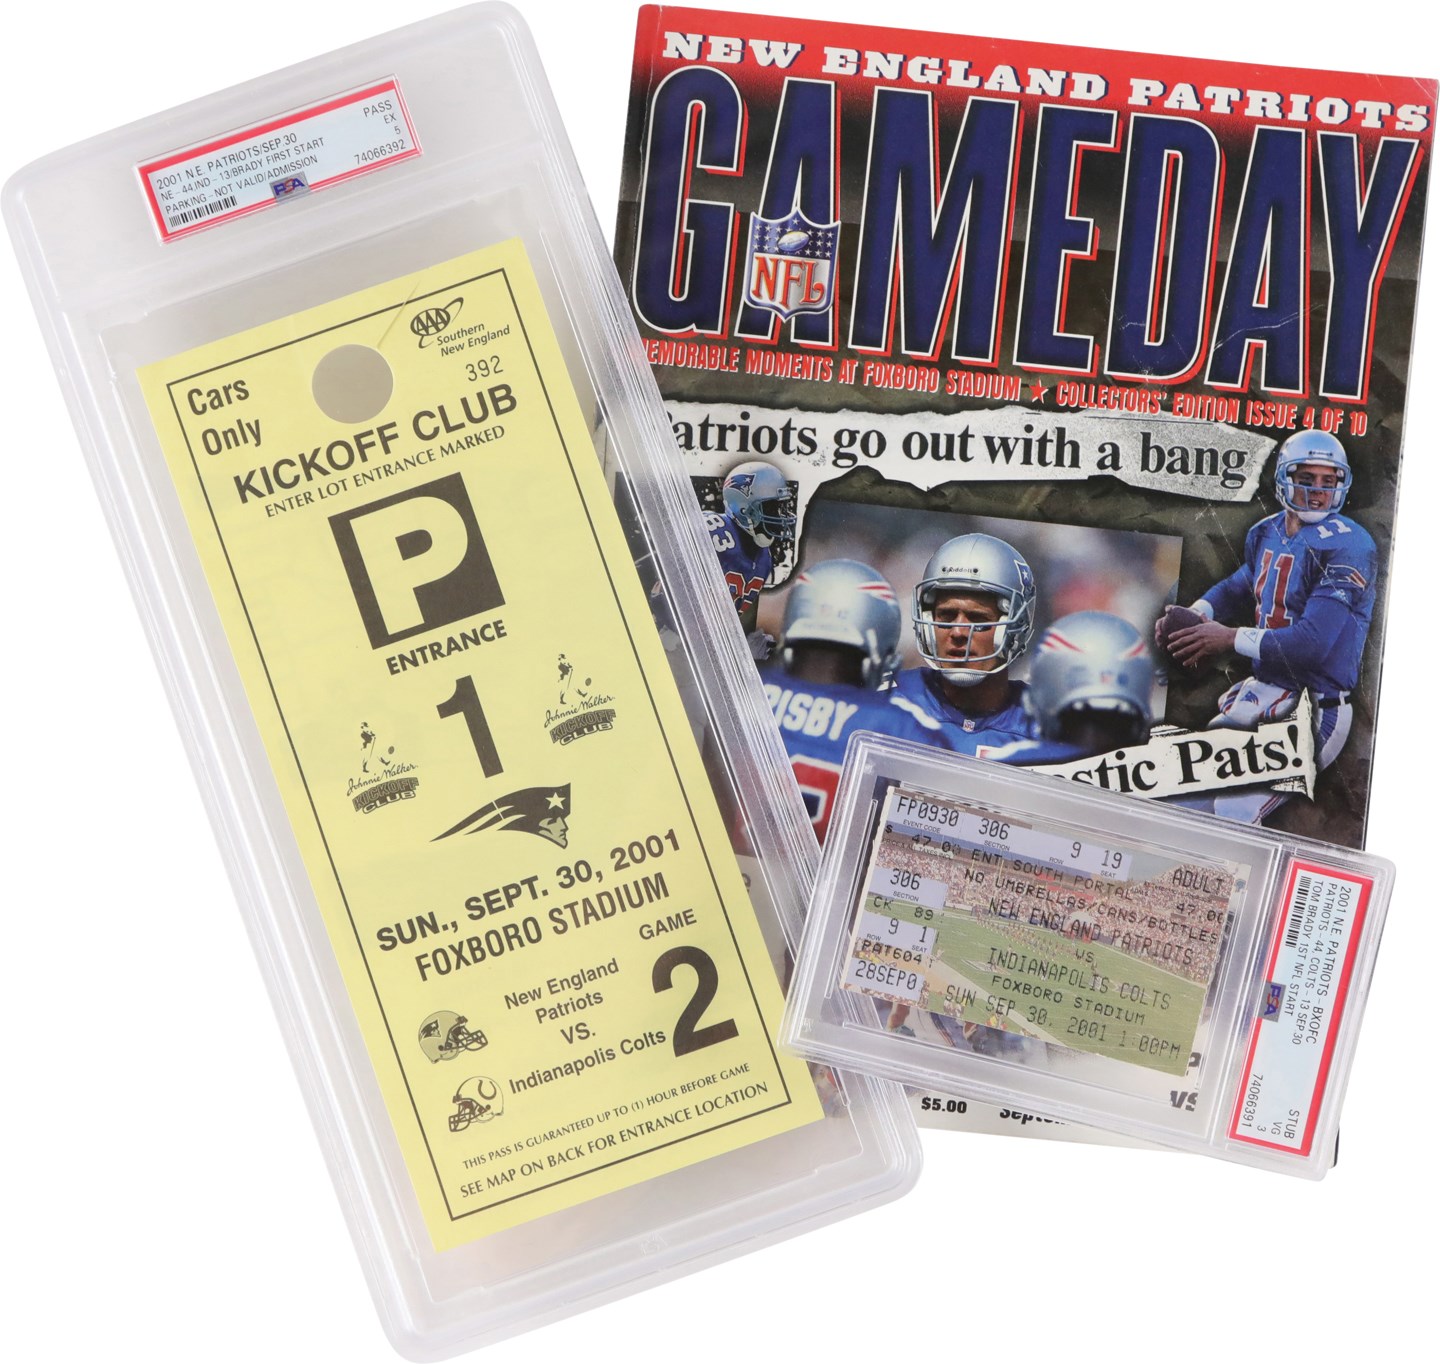 Football - 9/30/01 Tom Brady First Career Start Ticket Stub, Program, and Parking Pass (PSA)